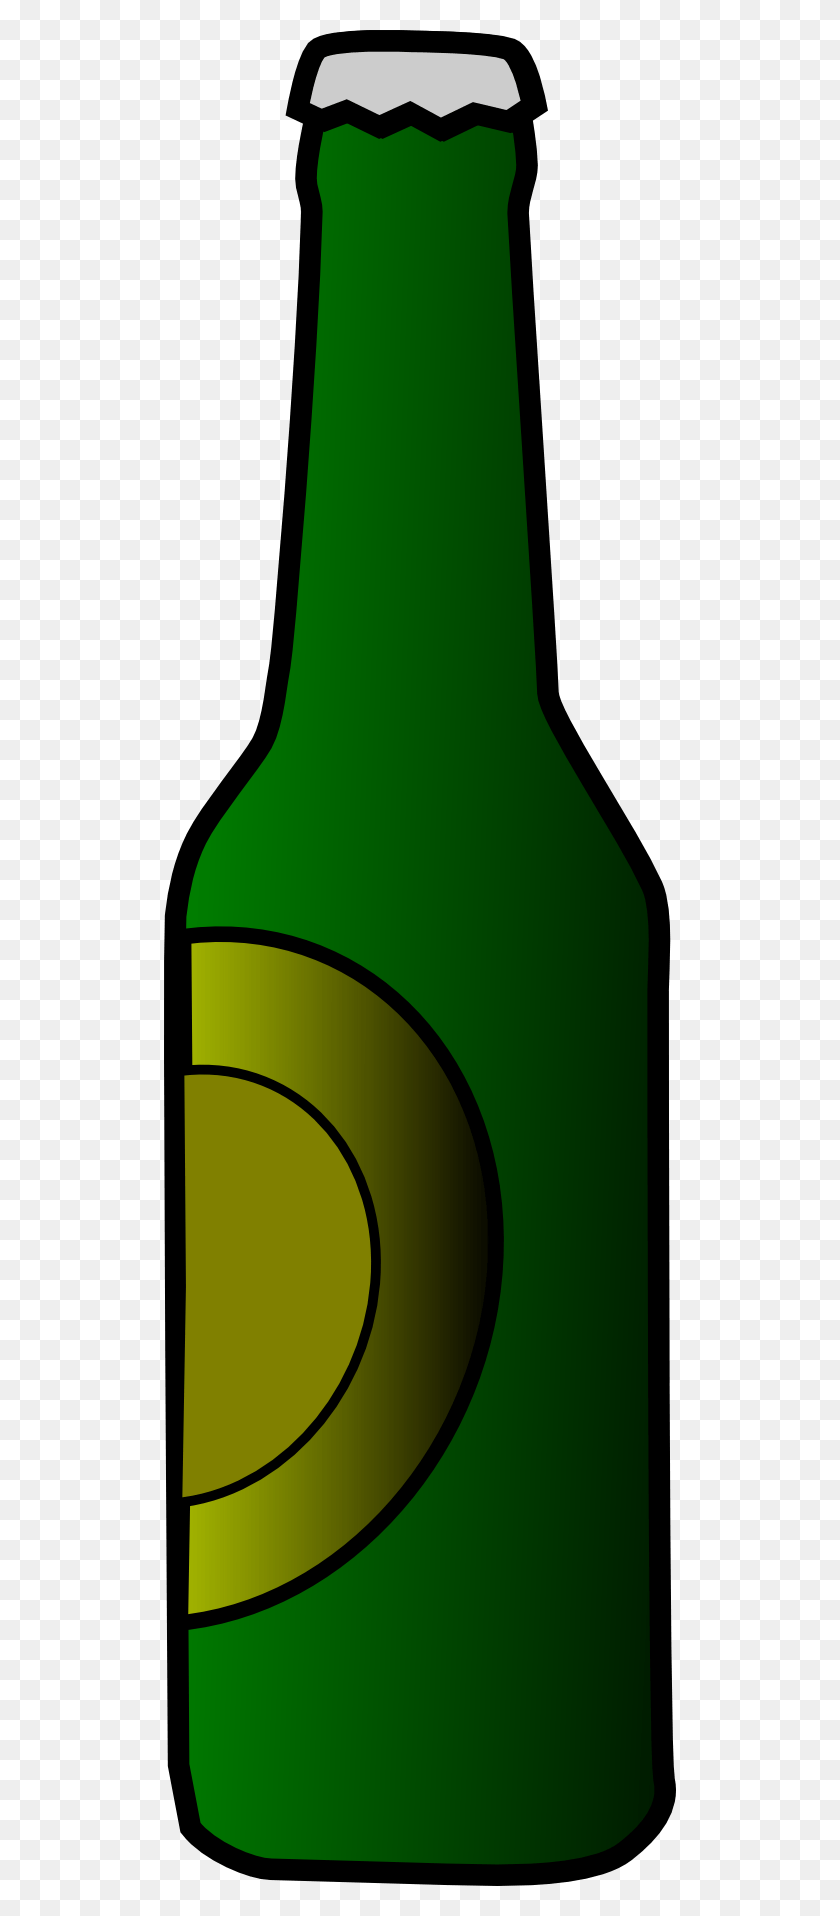 Нарисованная бутылка пива